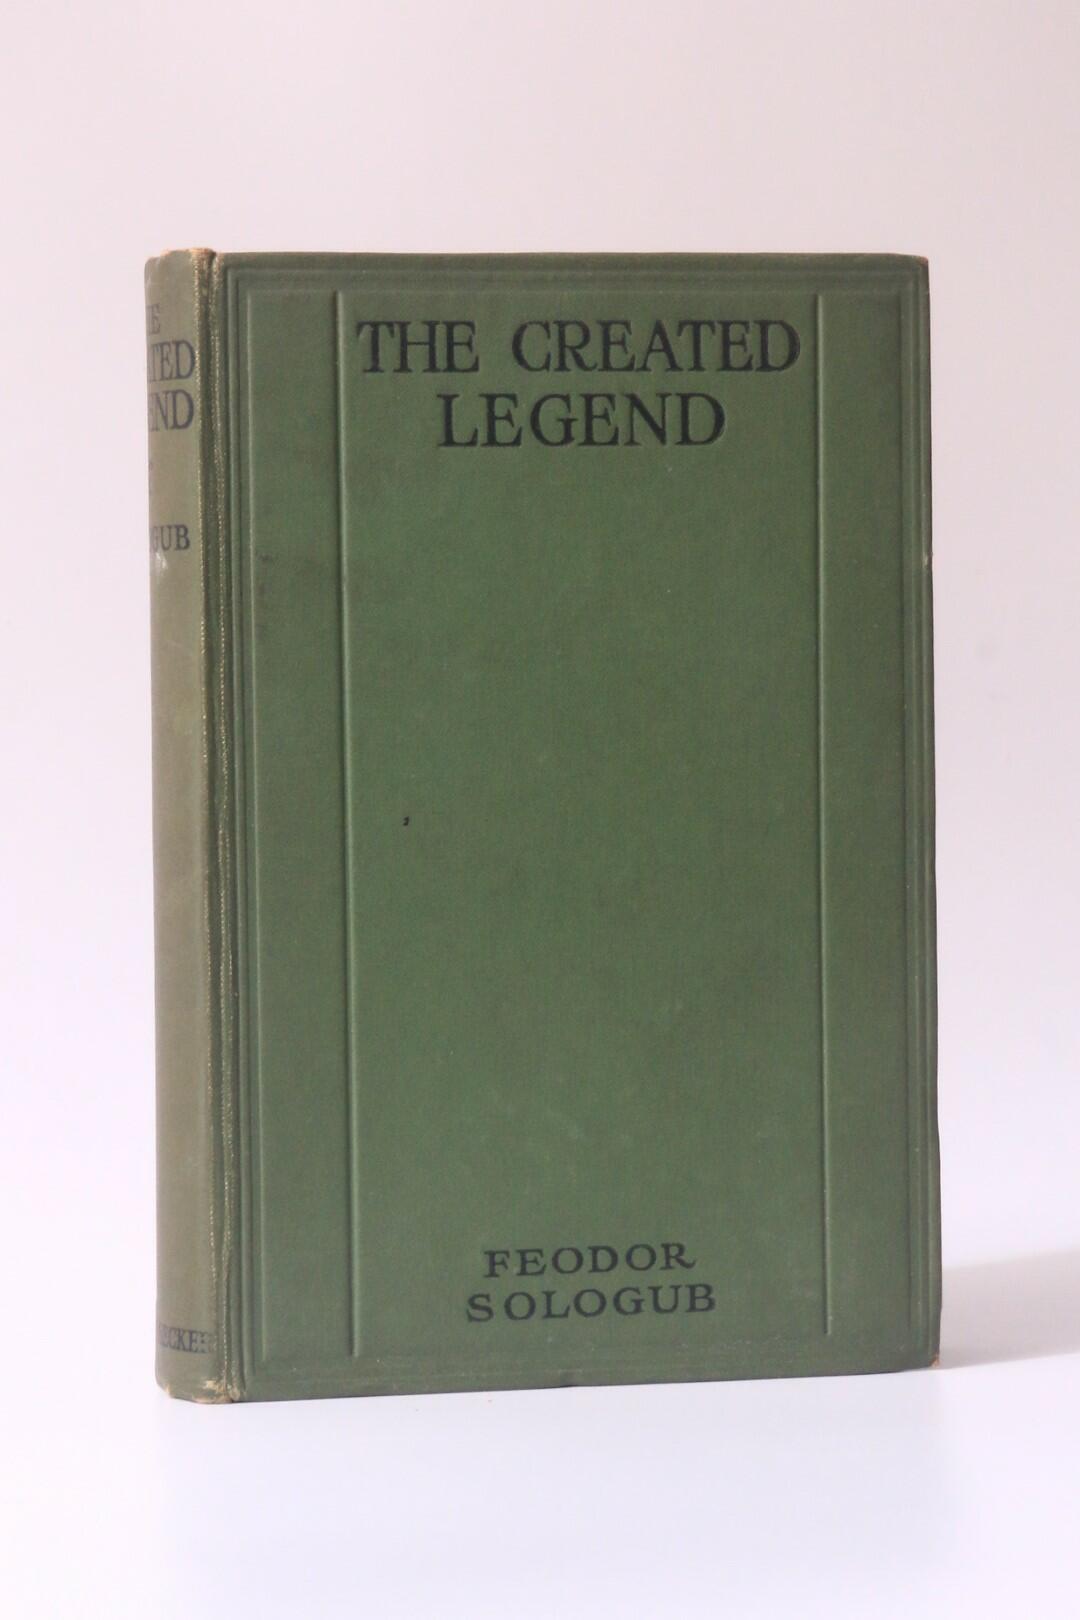 Feodor Sologub - The Created Legend - Martin Secker, 1916, First Edition.